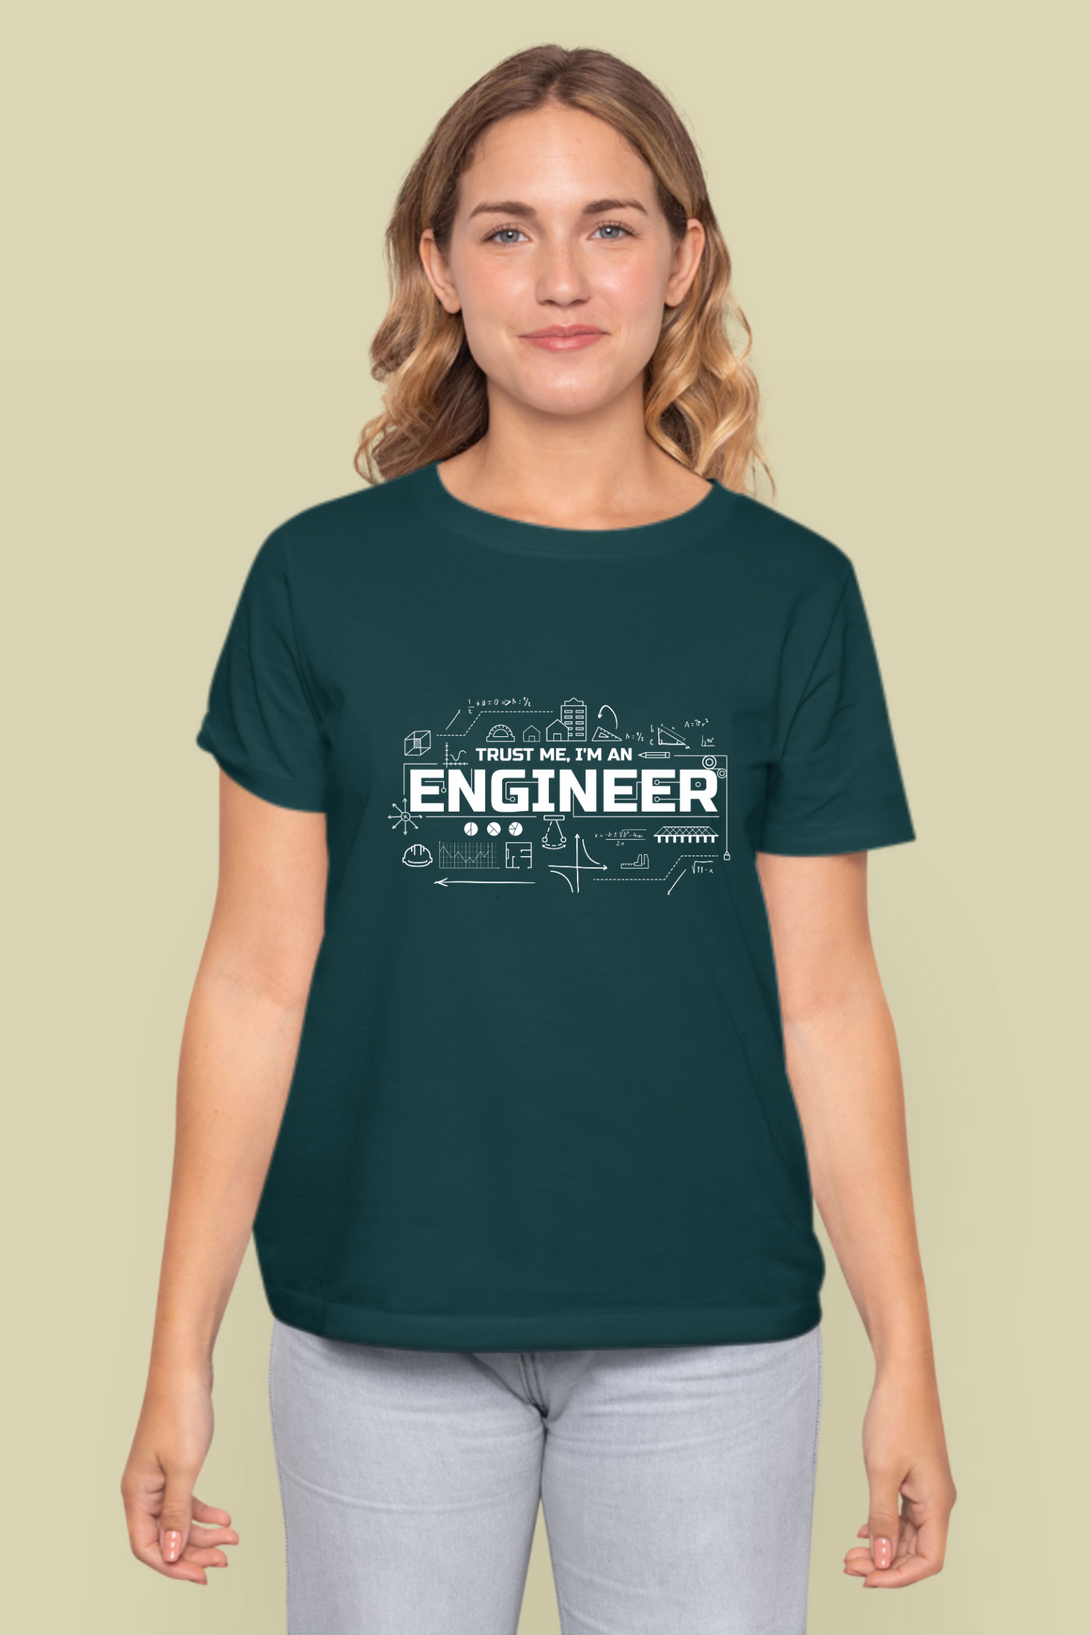 Trust Me, I'M An Engineer Printed T-Shirt For Women - WowWaves - 10